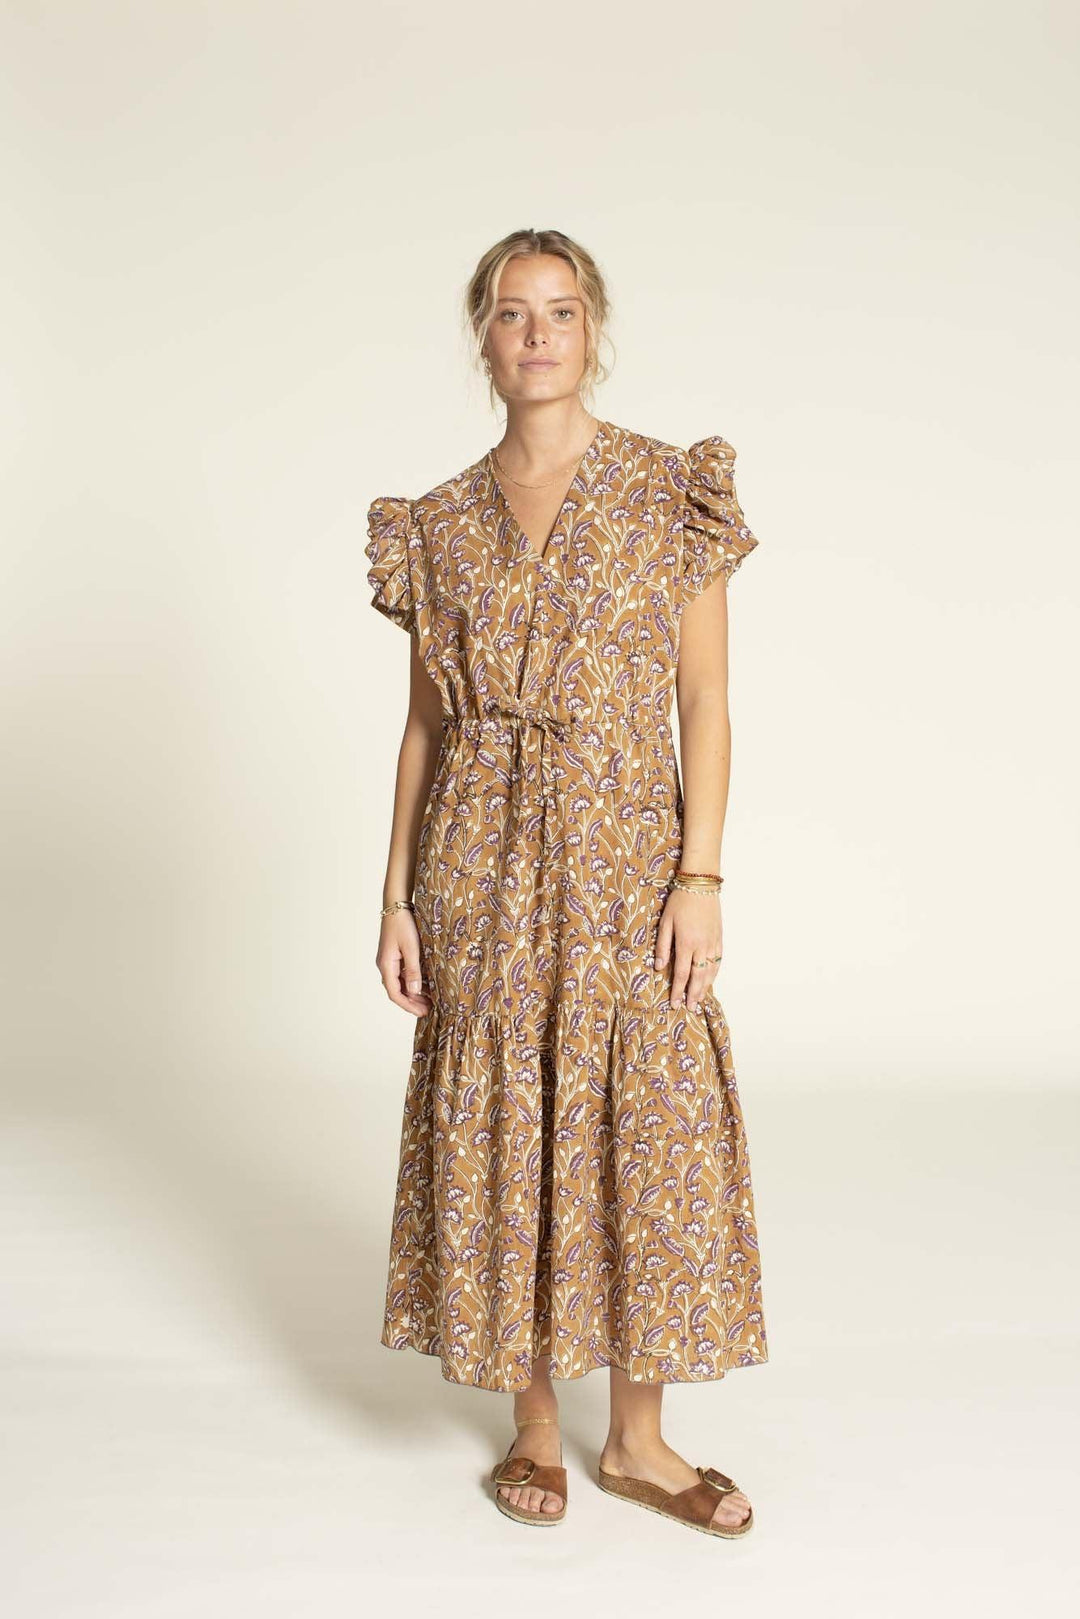 Abby Dress Sewing Pattern-Women's sizes